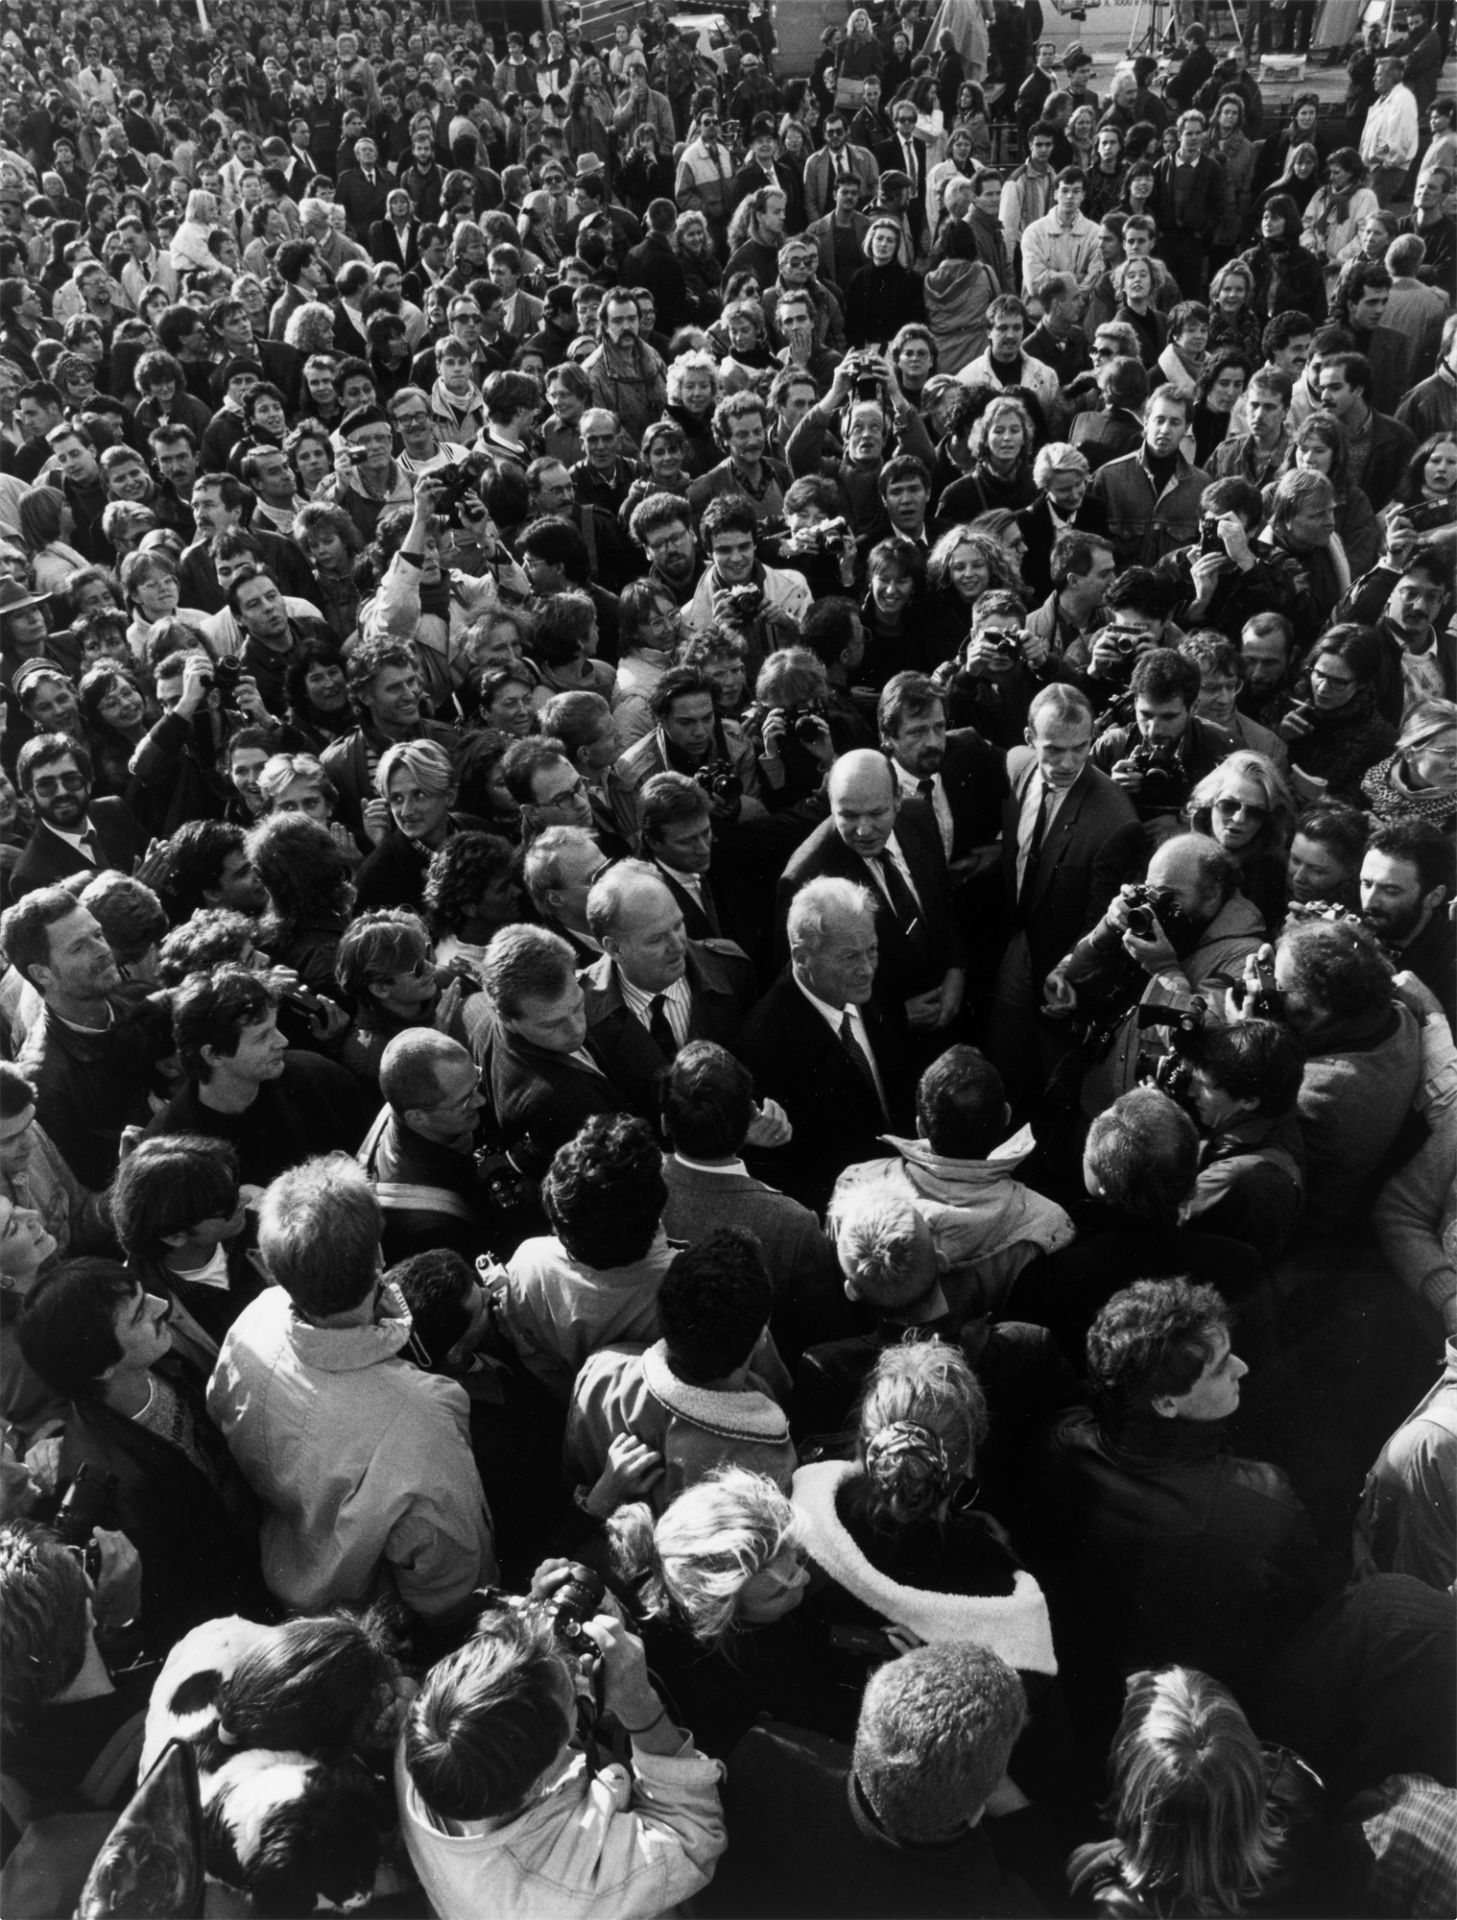 Barbara Klemm. ”Willy Brandt an der Mauer, Berlin 10. Nov.[ember] 1989”.